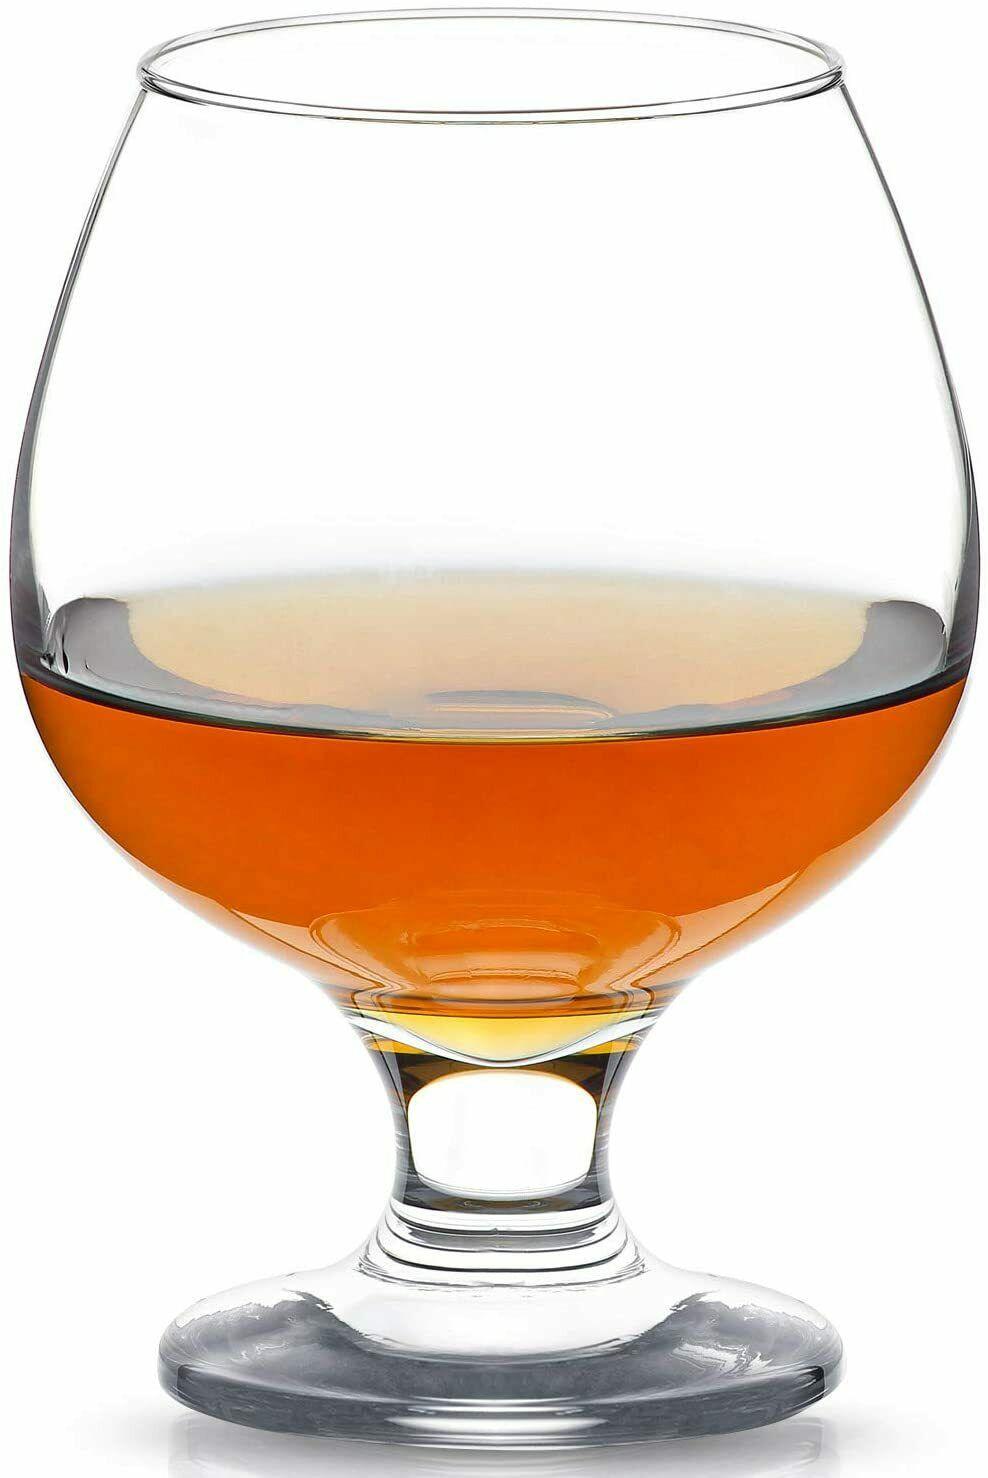 13.7oz 390ml Brandy Cognac Liquor Snifter Drinking Glasses Set - Box of 6